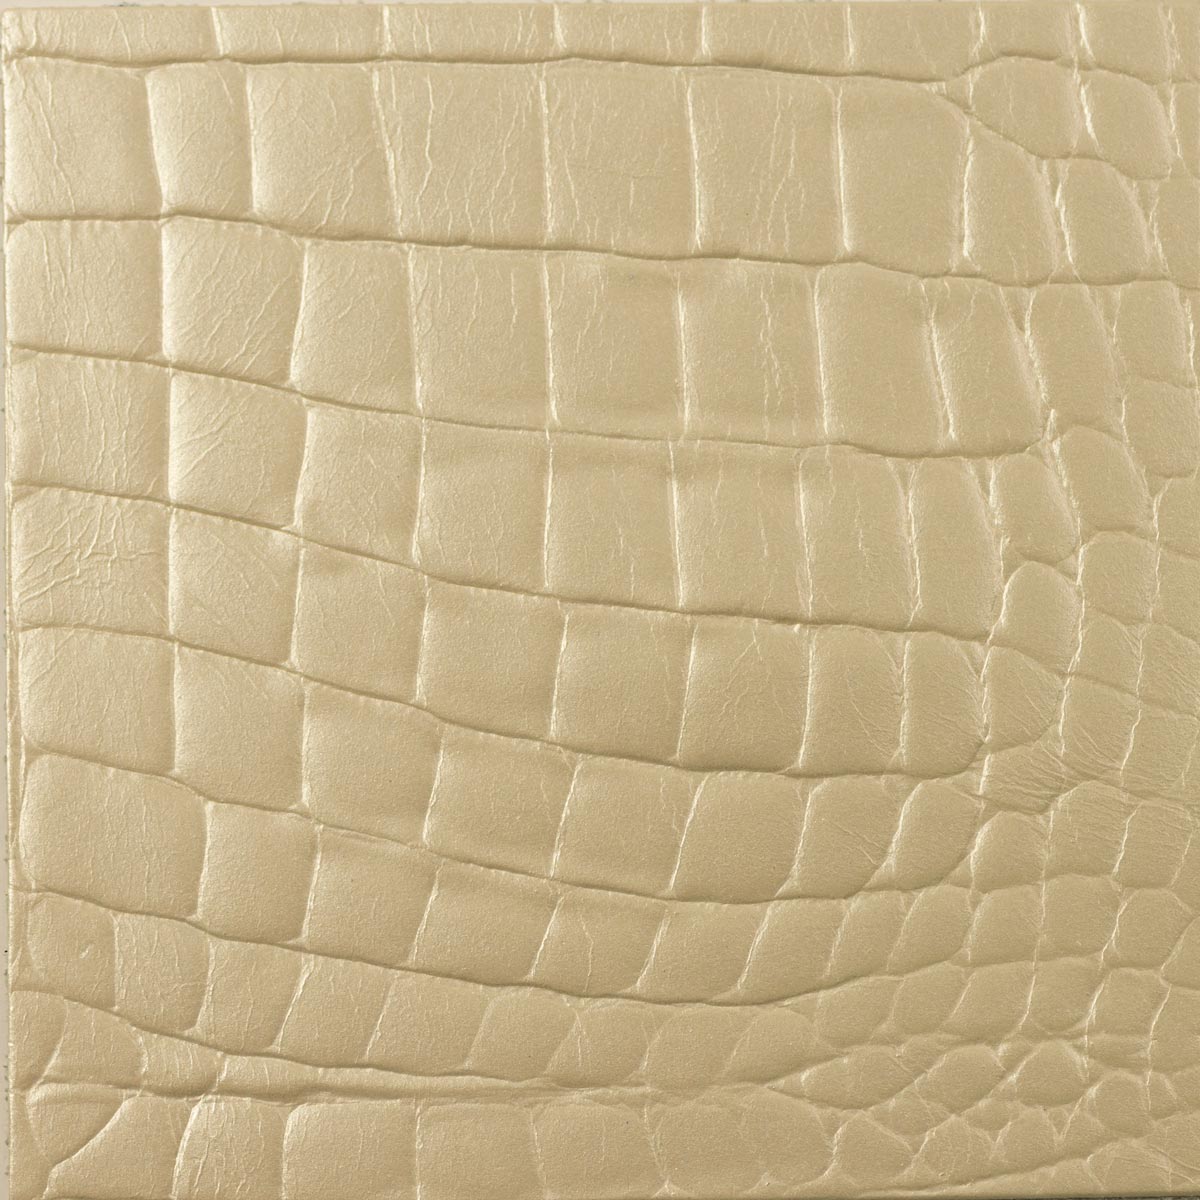 Bombay Croc Embossed Leather - Jamie Stern Design